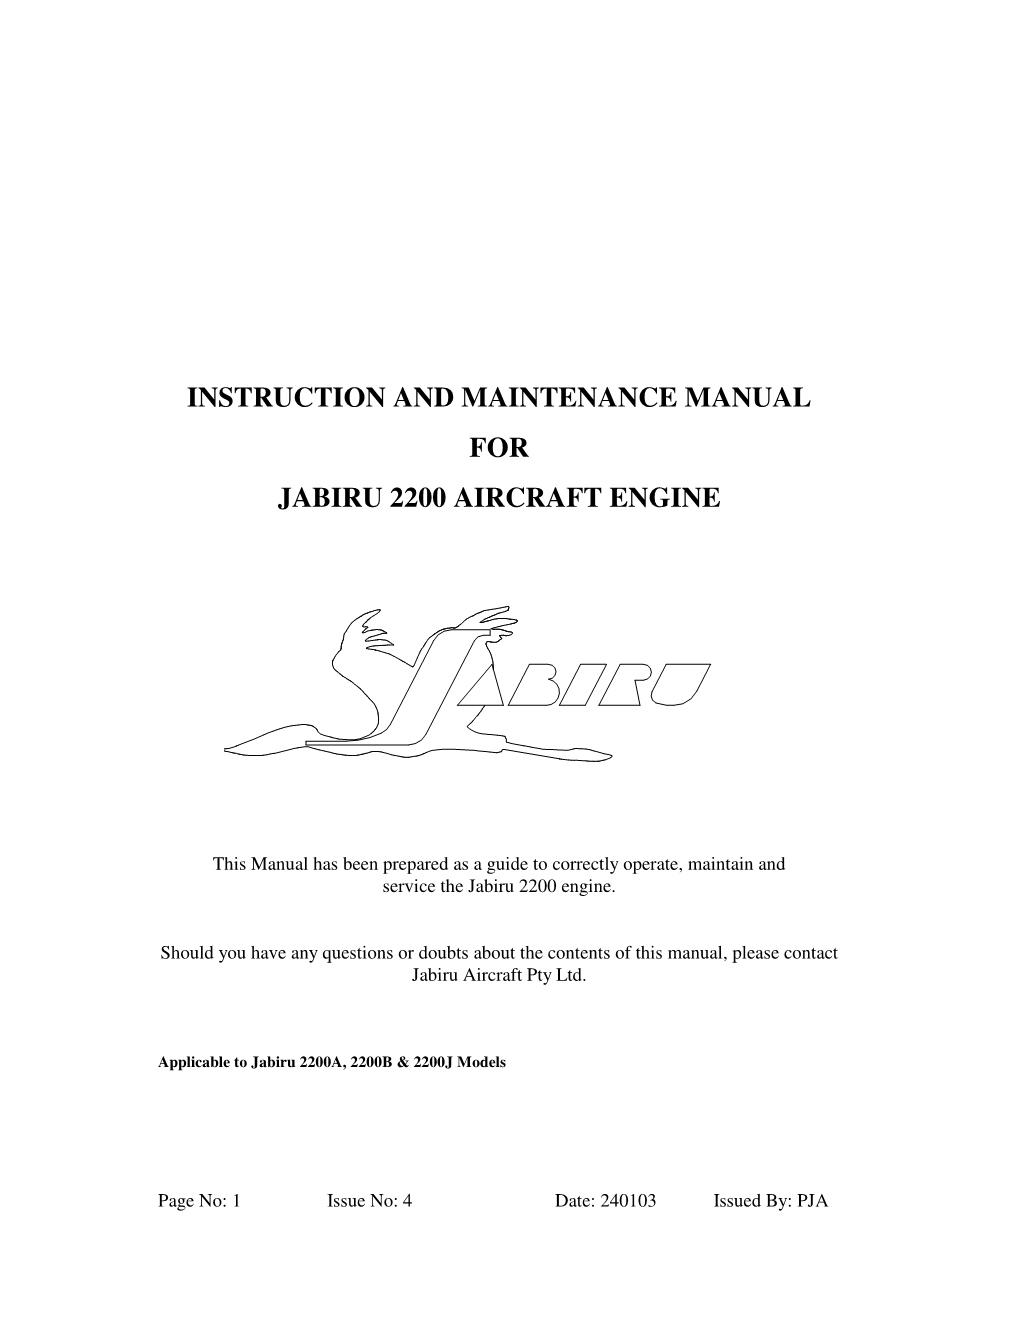 Instruction and Maintenance Manual for Jabiru 2200 Aircraft Engine